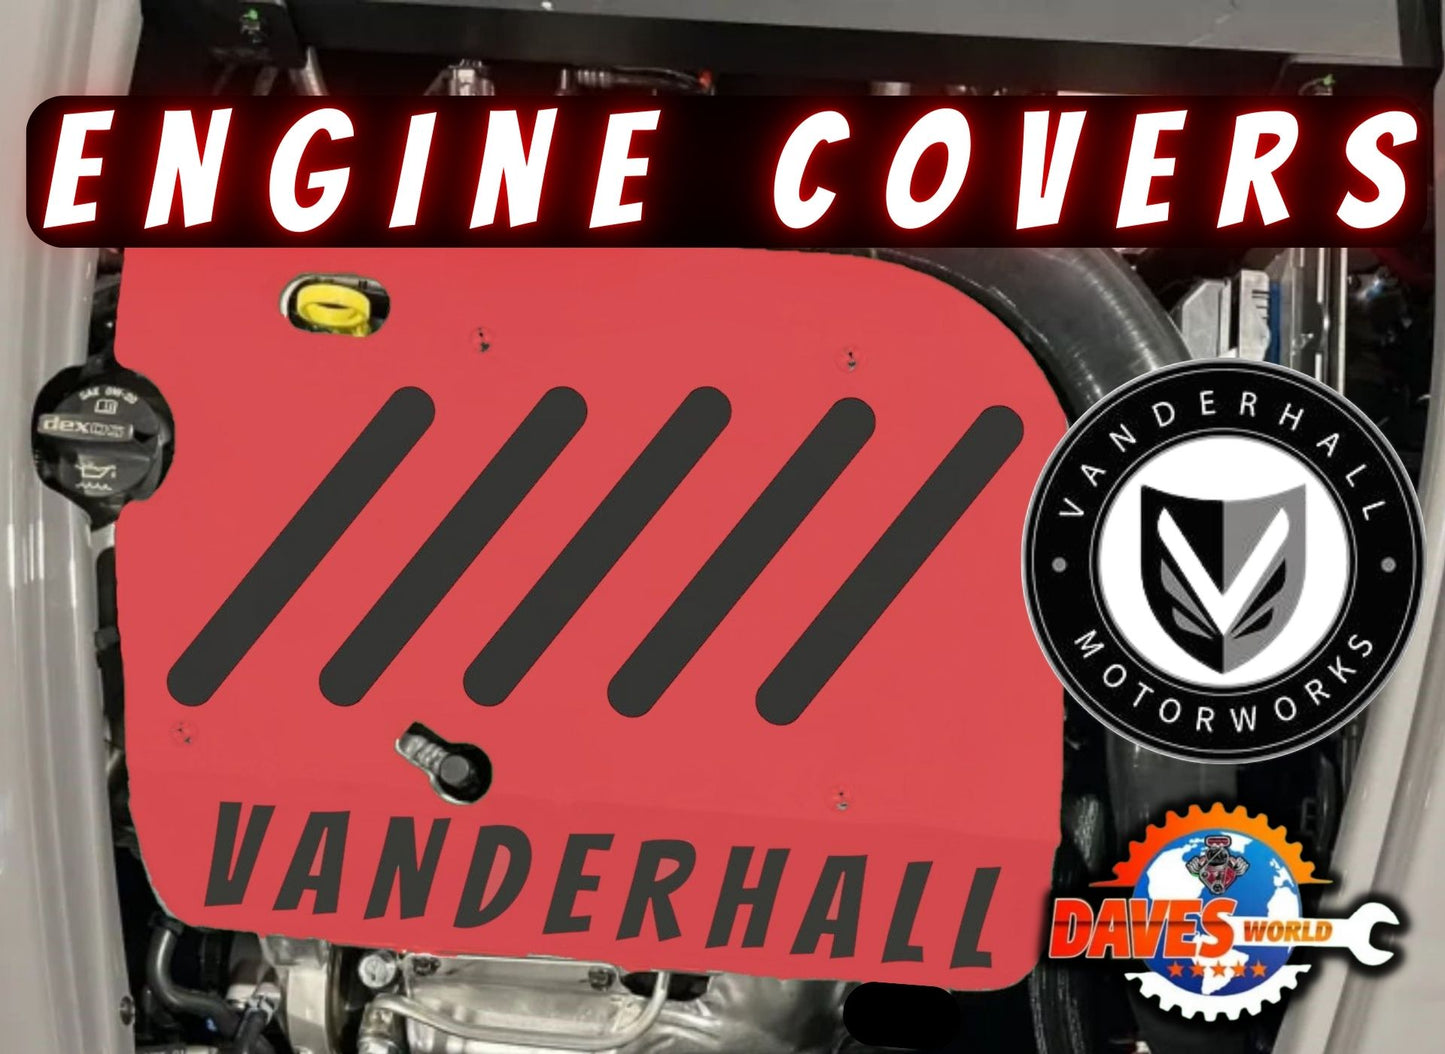 Vanderhall Engine Covers